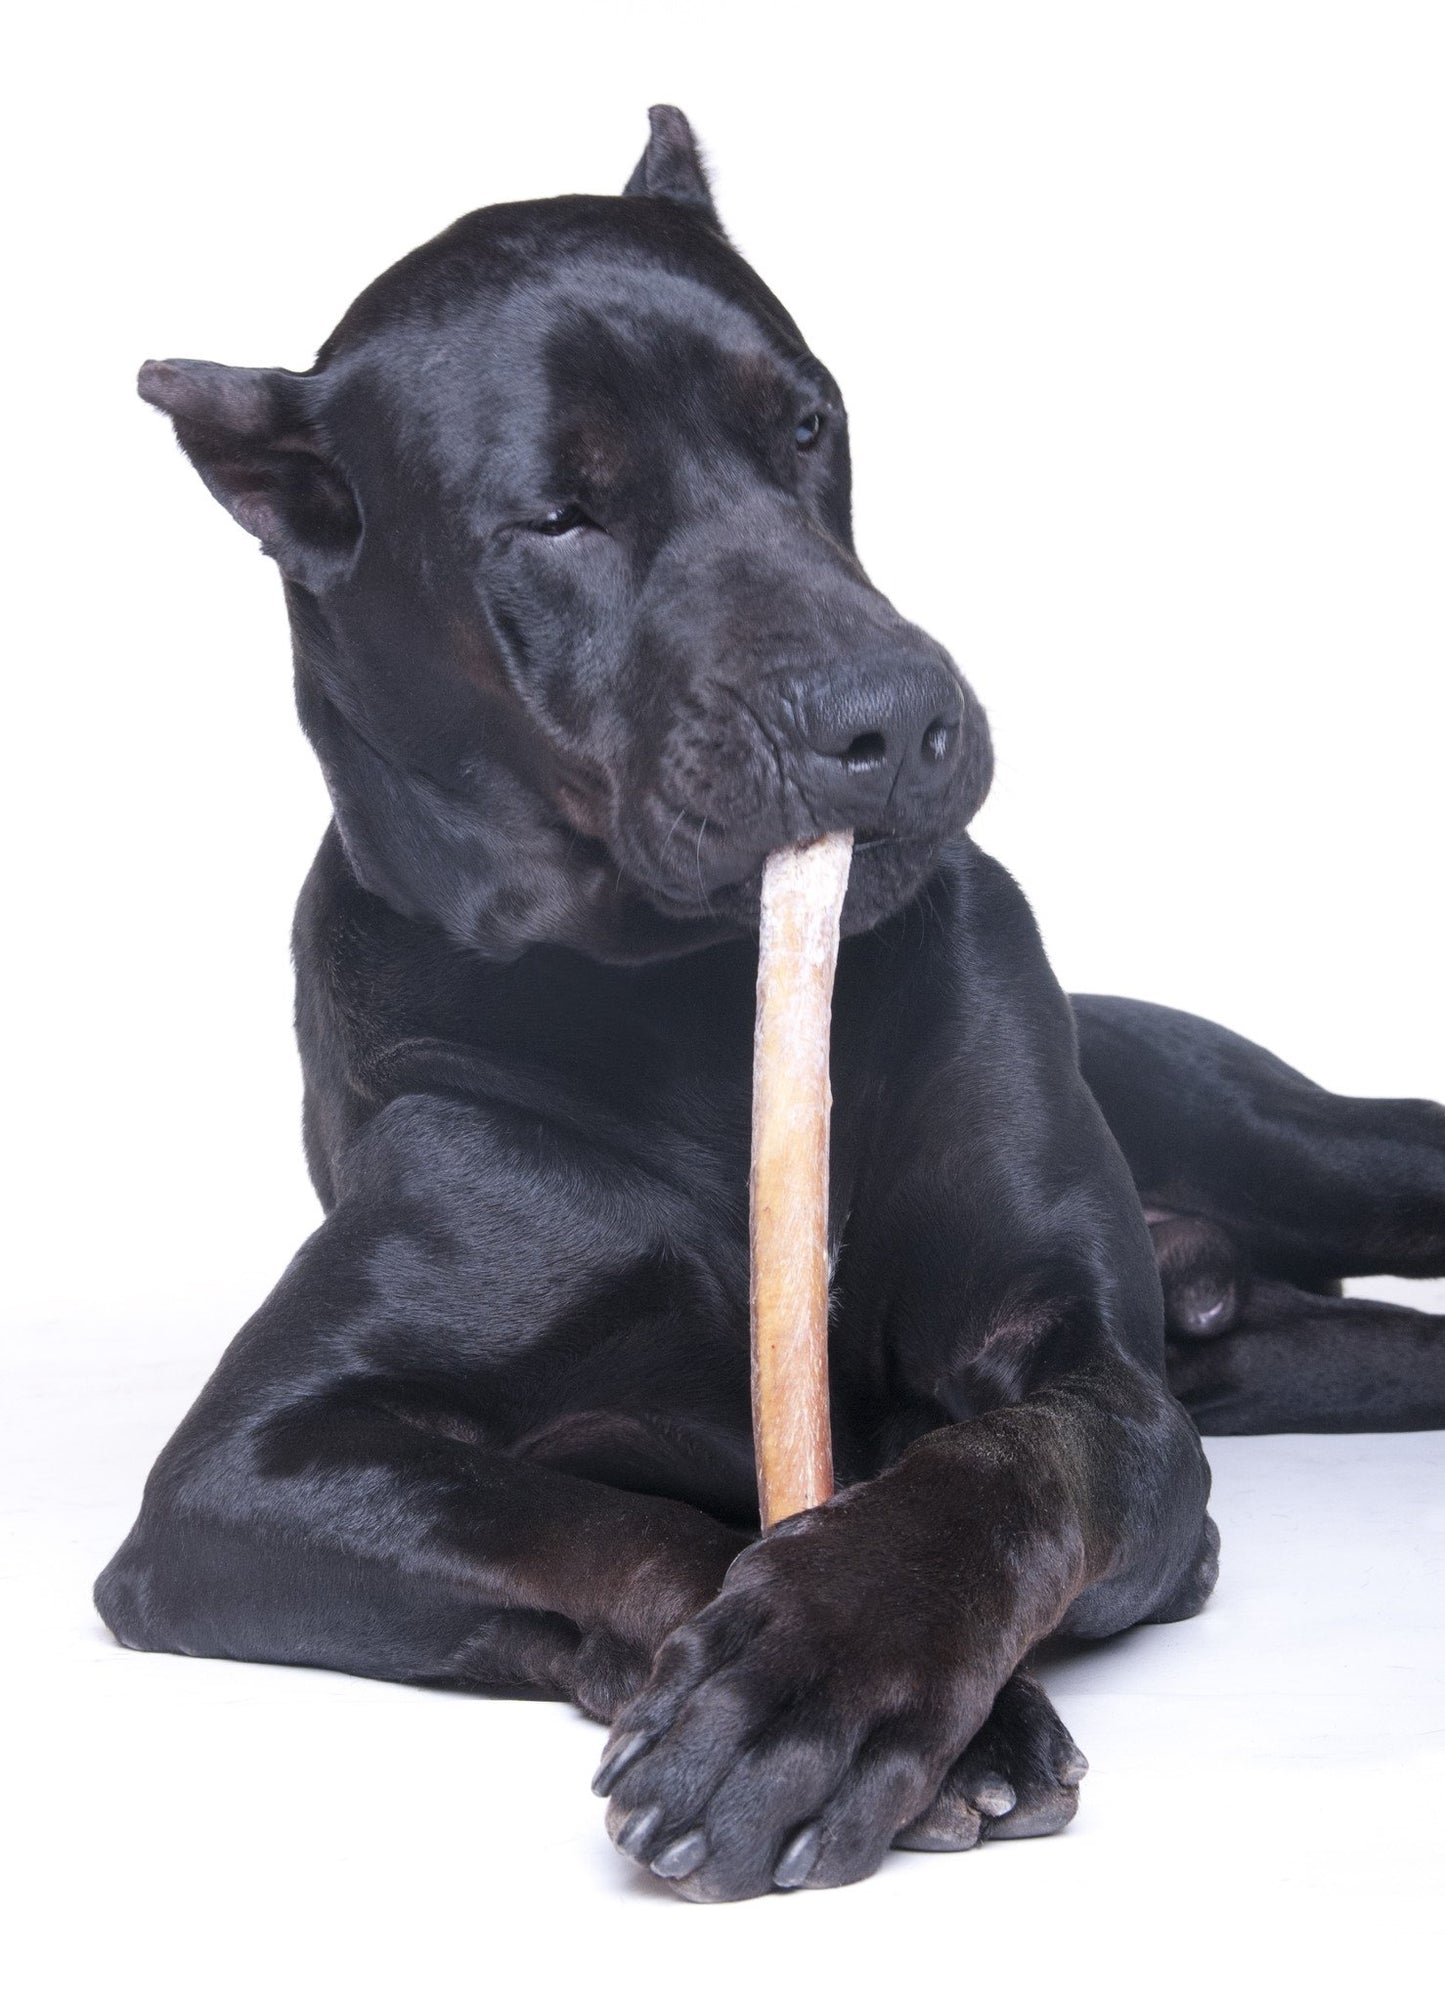 12 Inch Jumbo Bully Sticks, 100% Natural Dog Treat